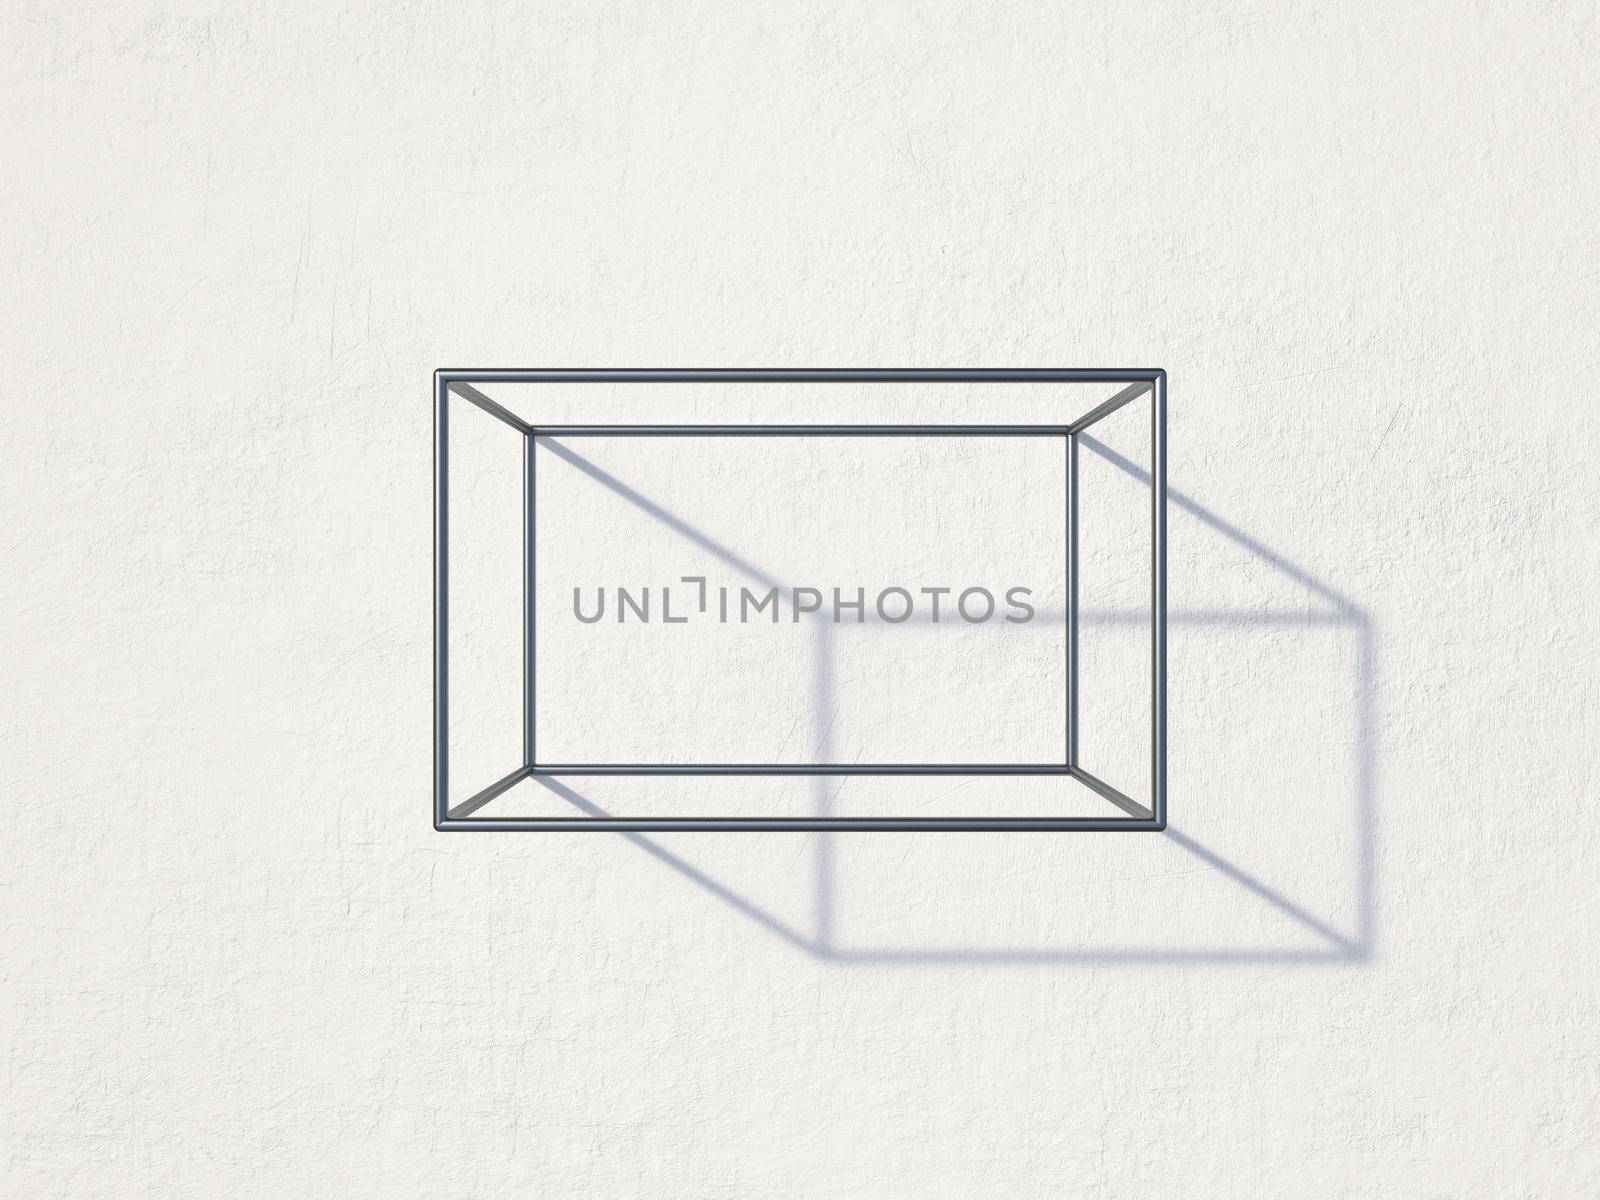 Single rectangular shaped wall rack 3D render illustration isolated on white background